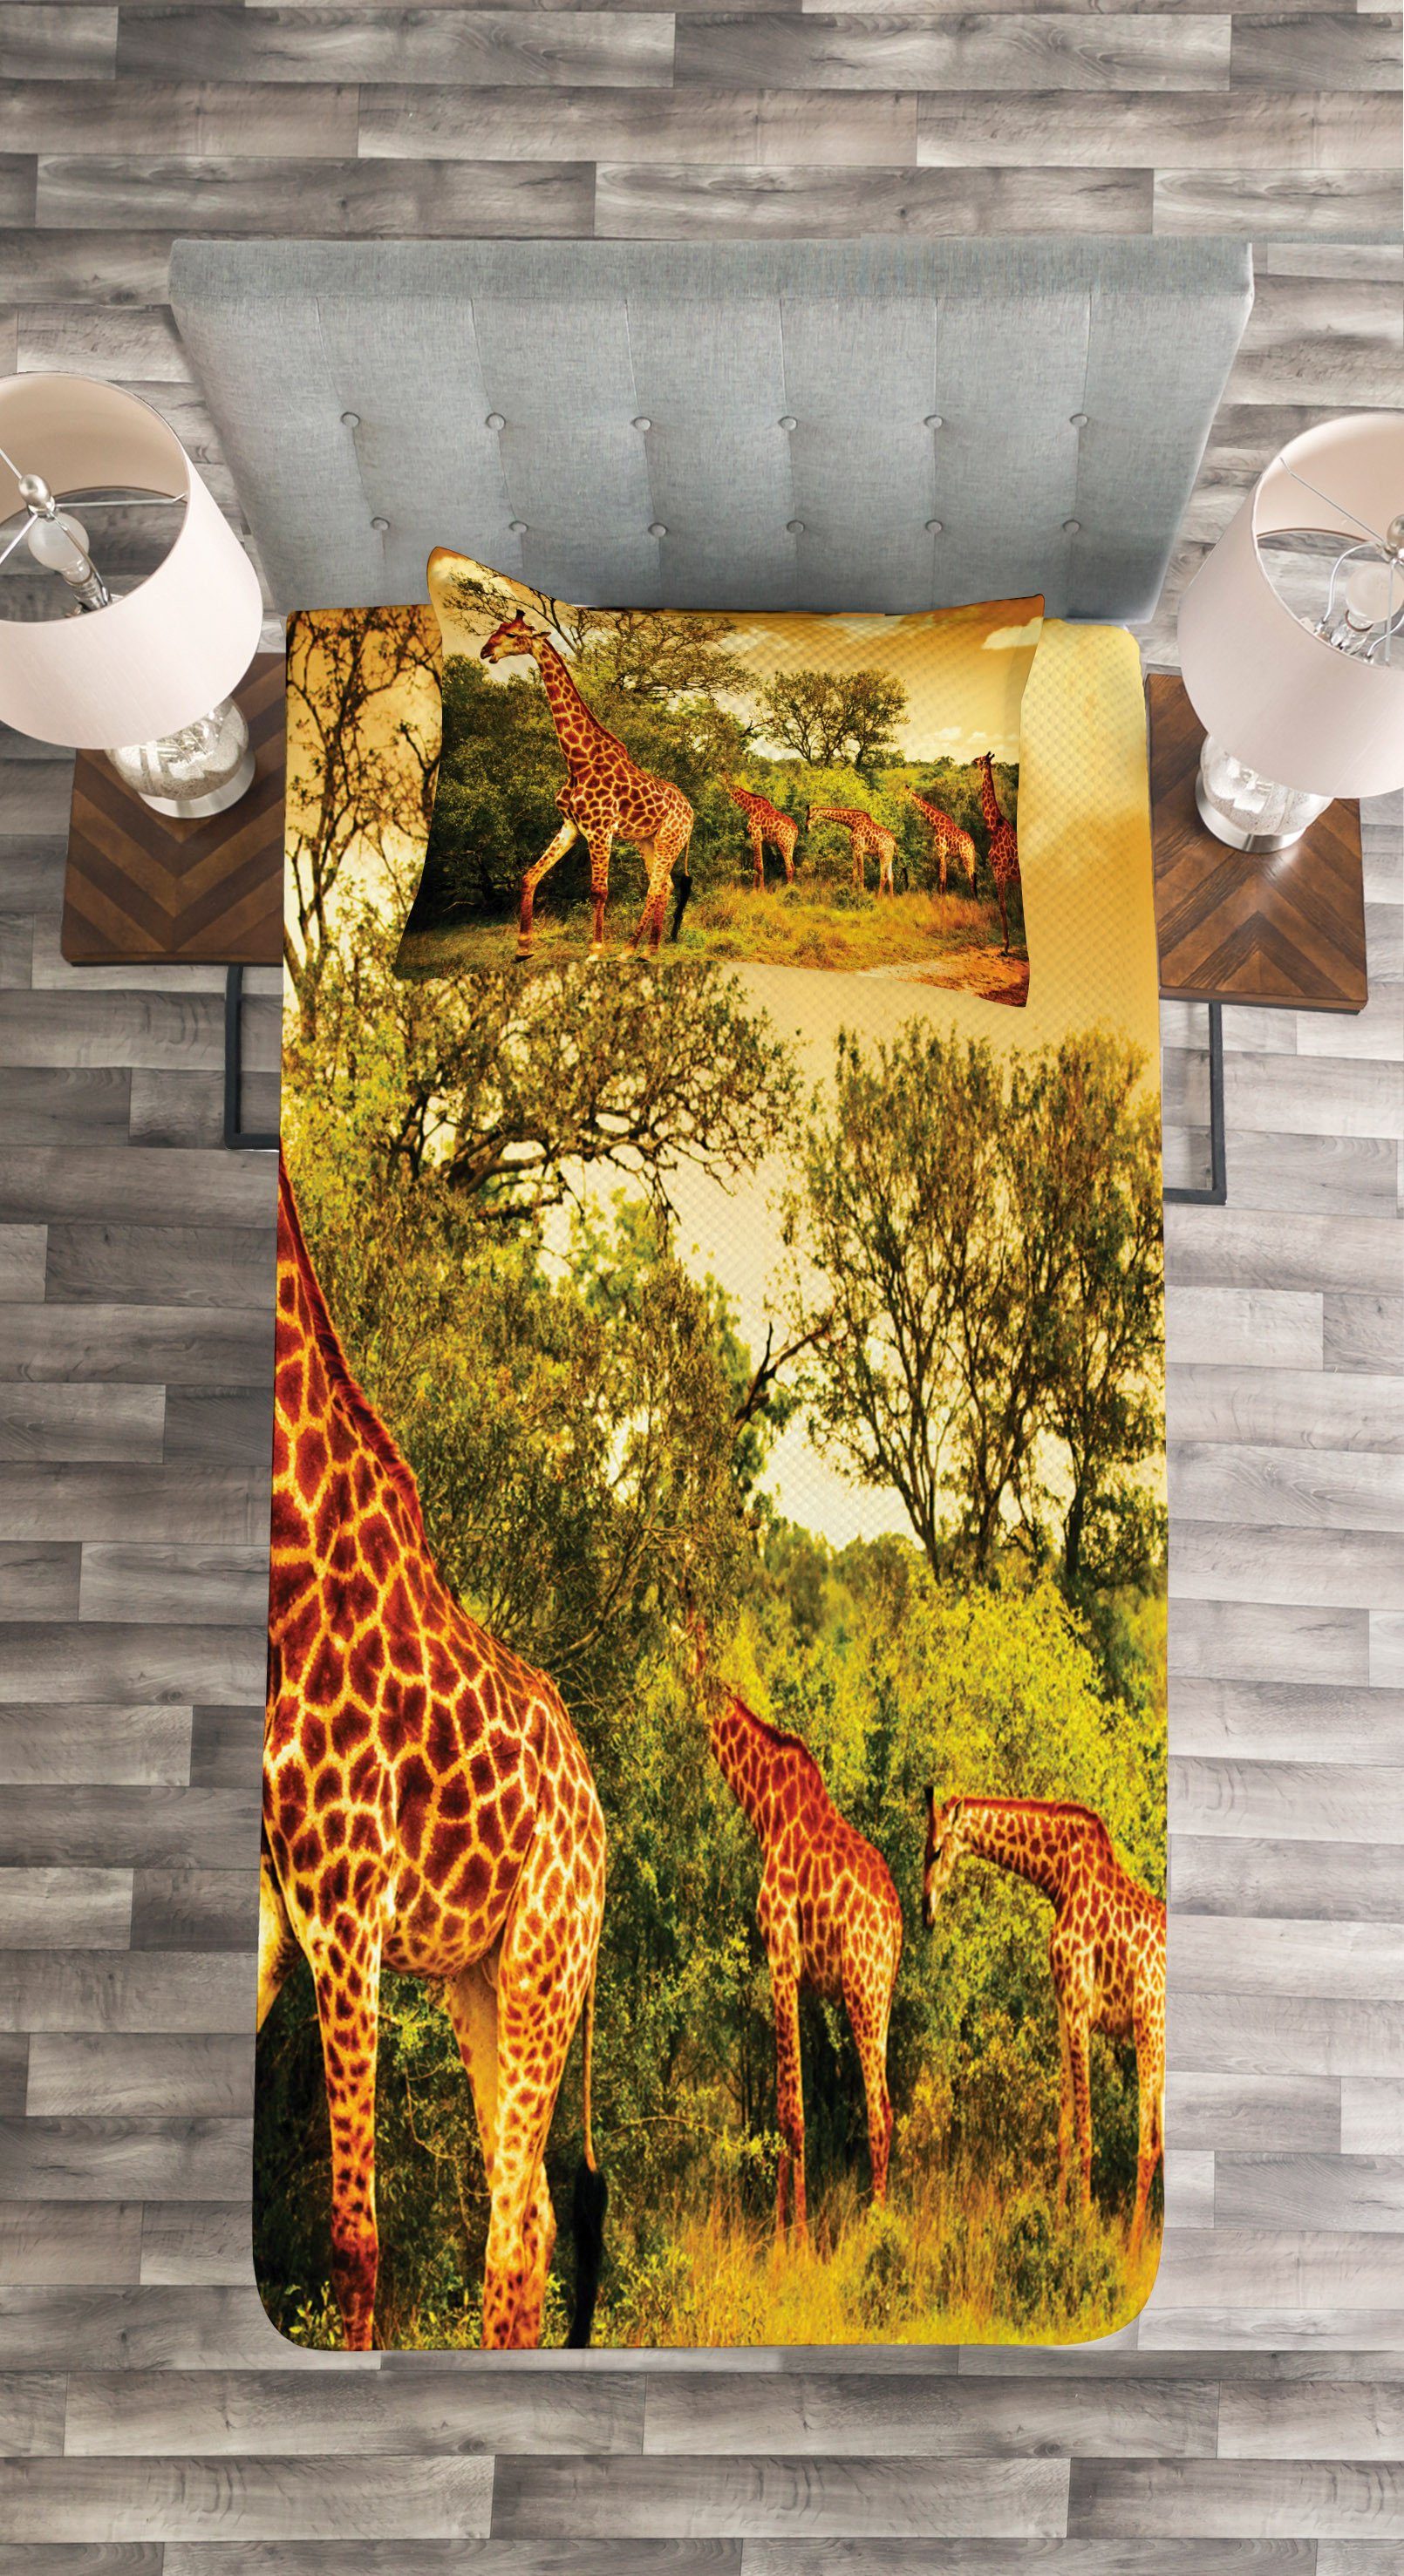 Abakuhaus, Set Tagesdecke Safaritiere Kissenbezügen Waschbar, mit Afrikanische Giraffe